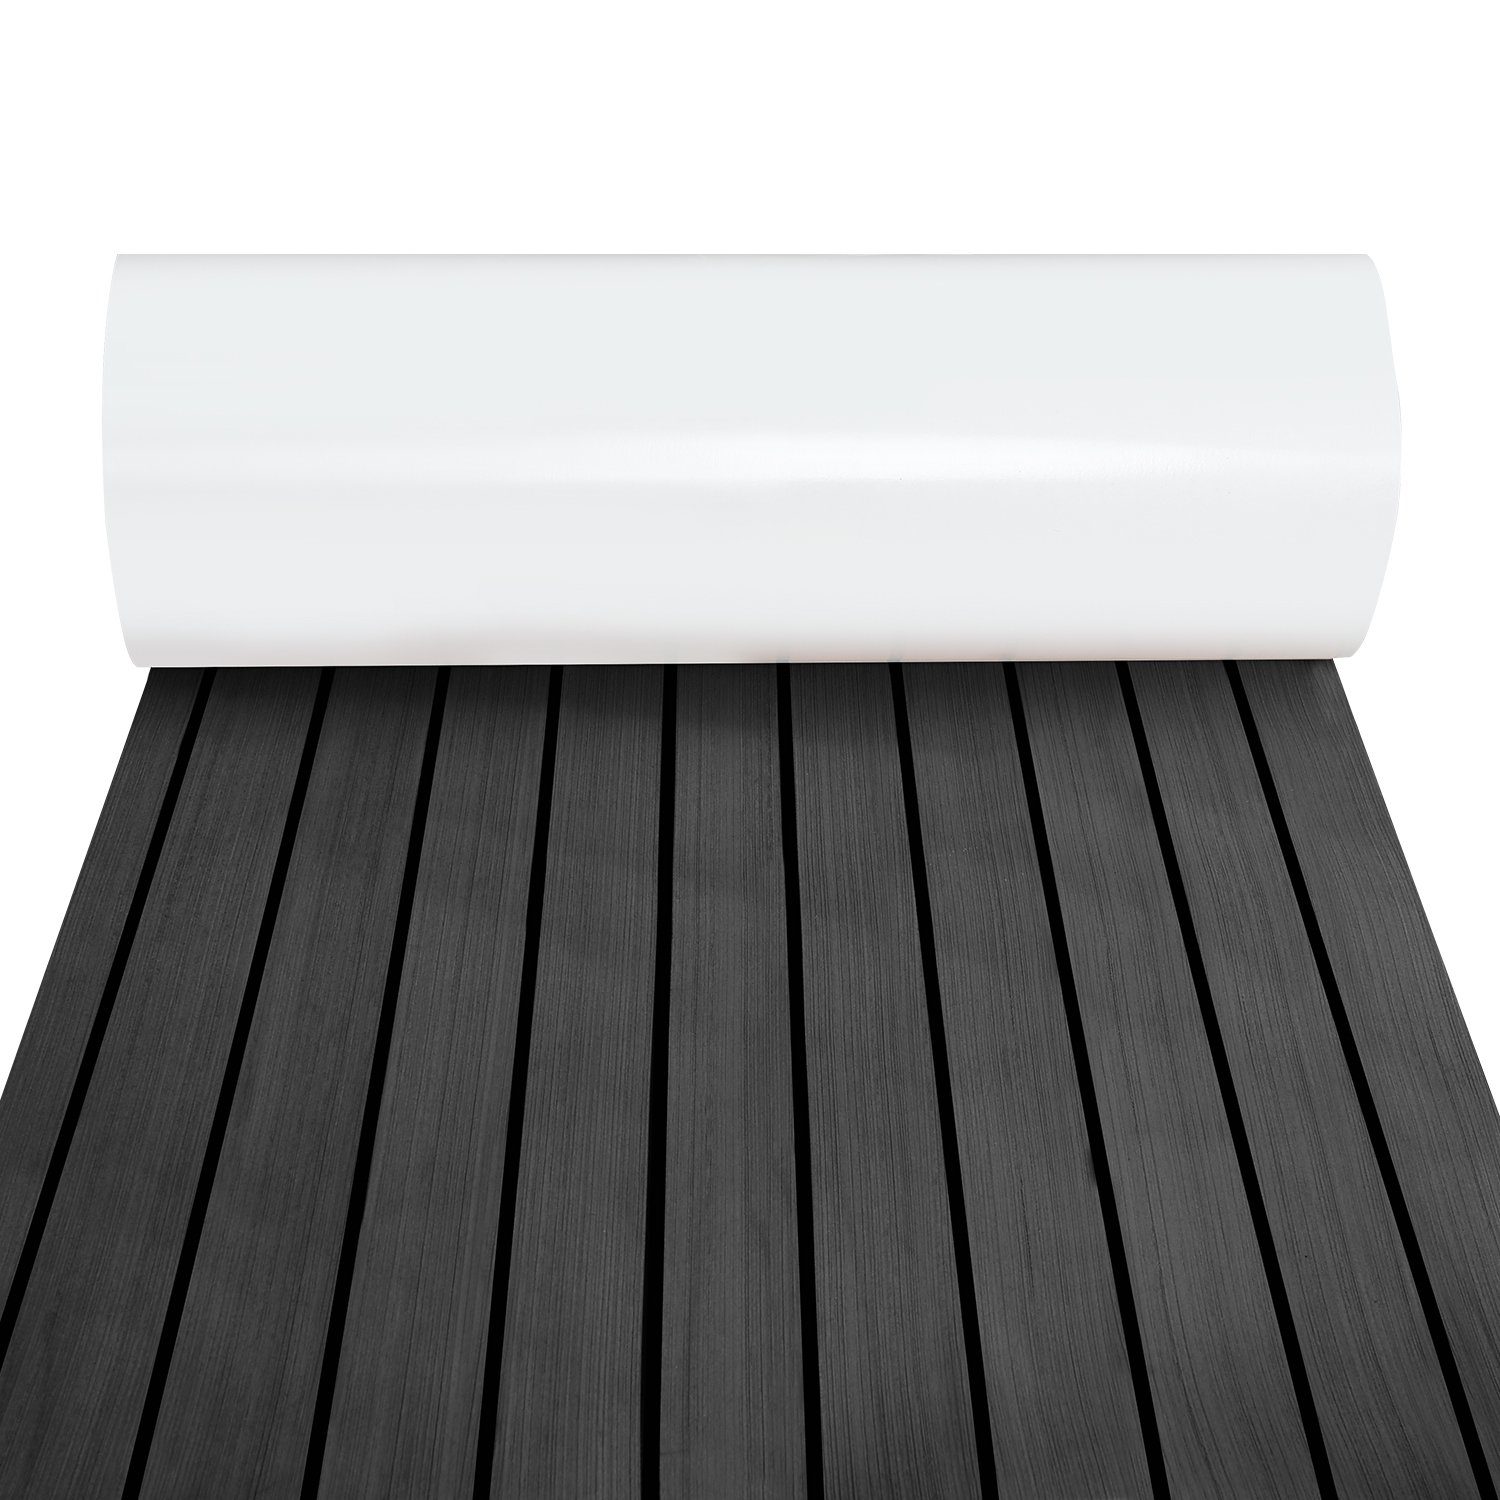 Schaum Bodenmatte Bodenmatte Bodenbelag Matte Deck Teak EVA Teppich Anti-Rutsch Gimisgu